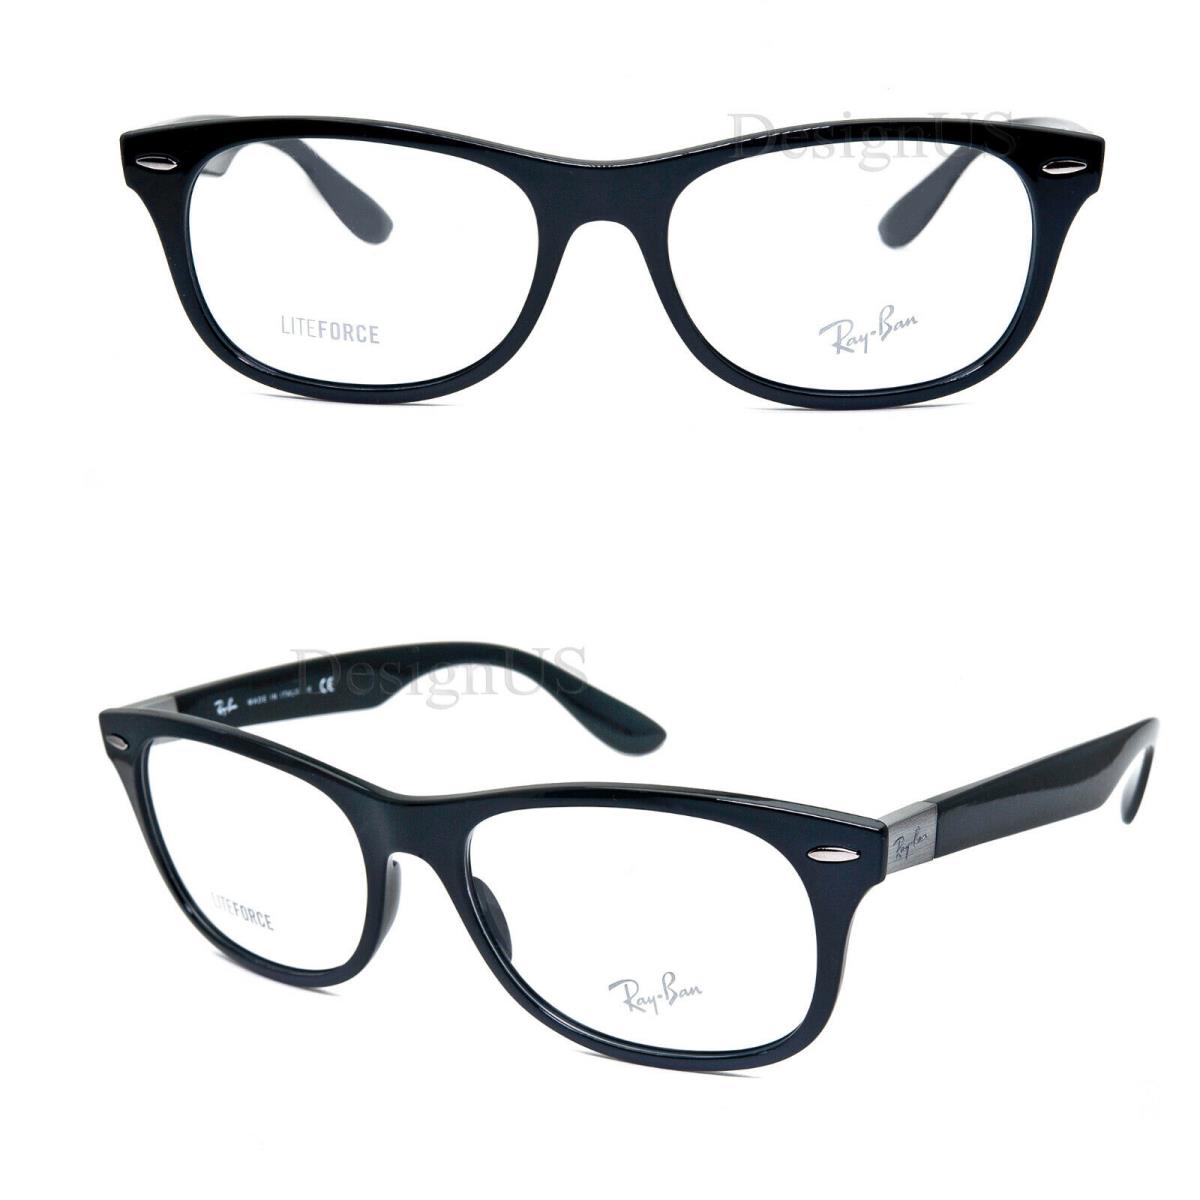 Ray Ban RB 7032 5206 Liteforce Black 55/17/150 Italy Eyeglasses